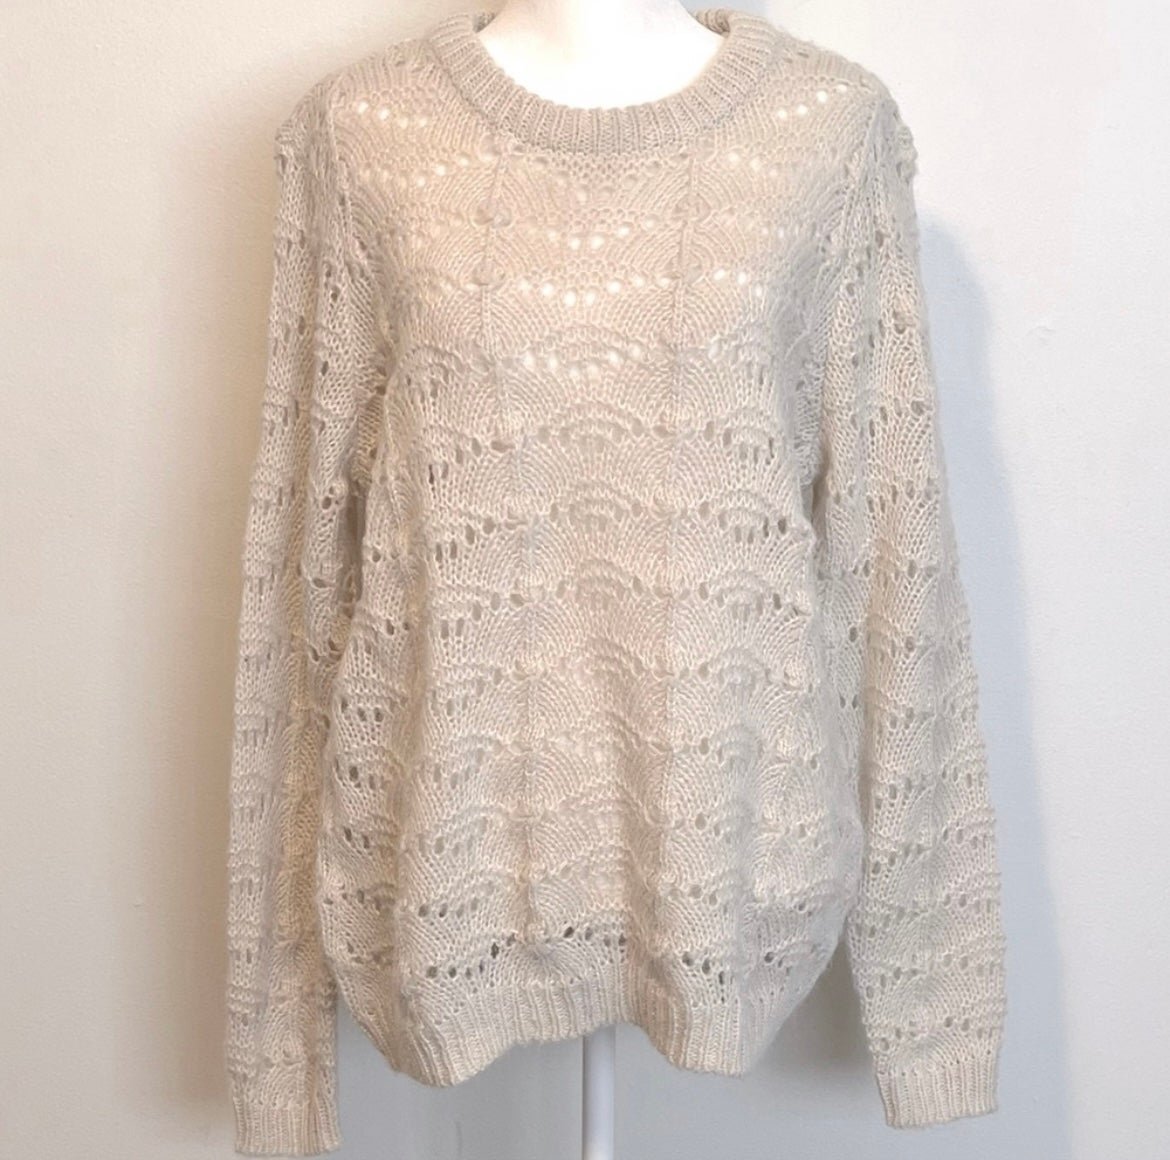 Simple Vero Moda lace knit cream sweater OLsCwjWpB Fact